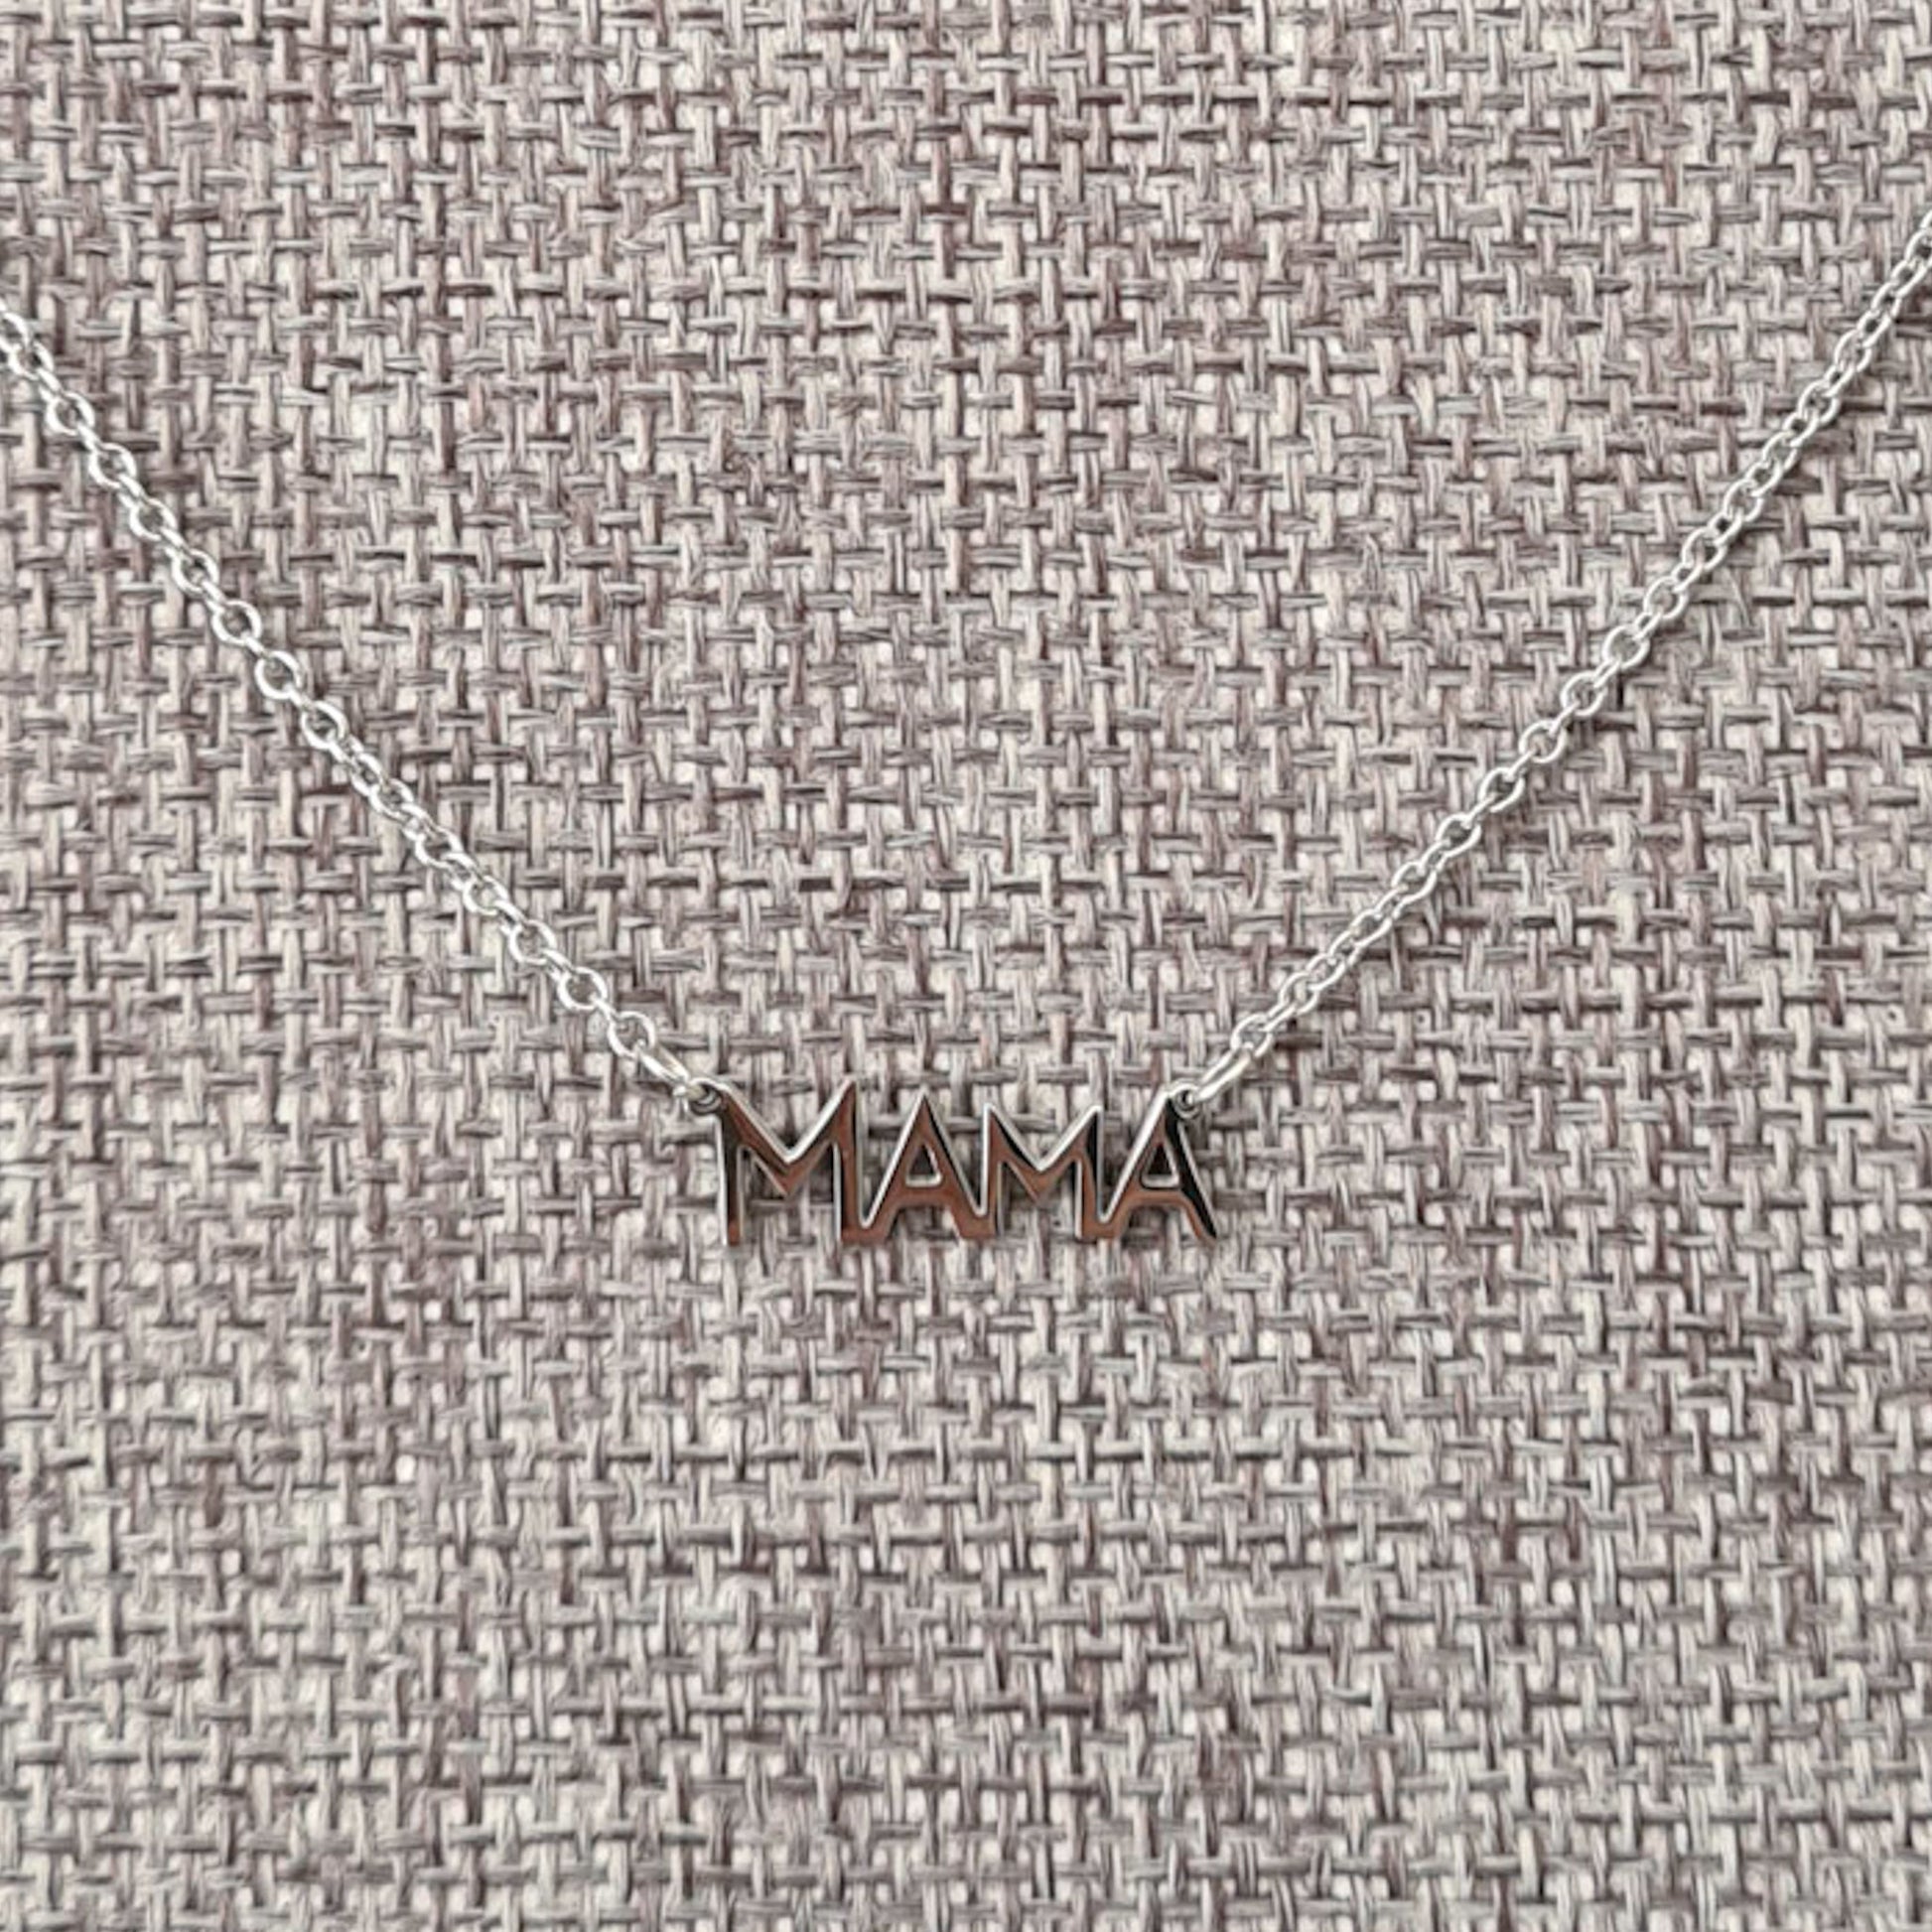 Mama monogram letter necklace